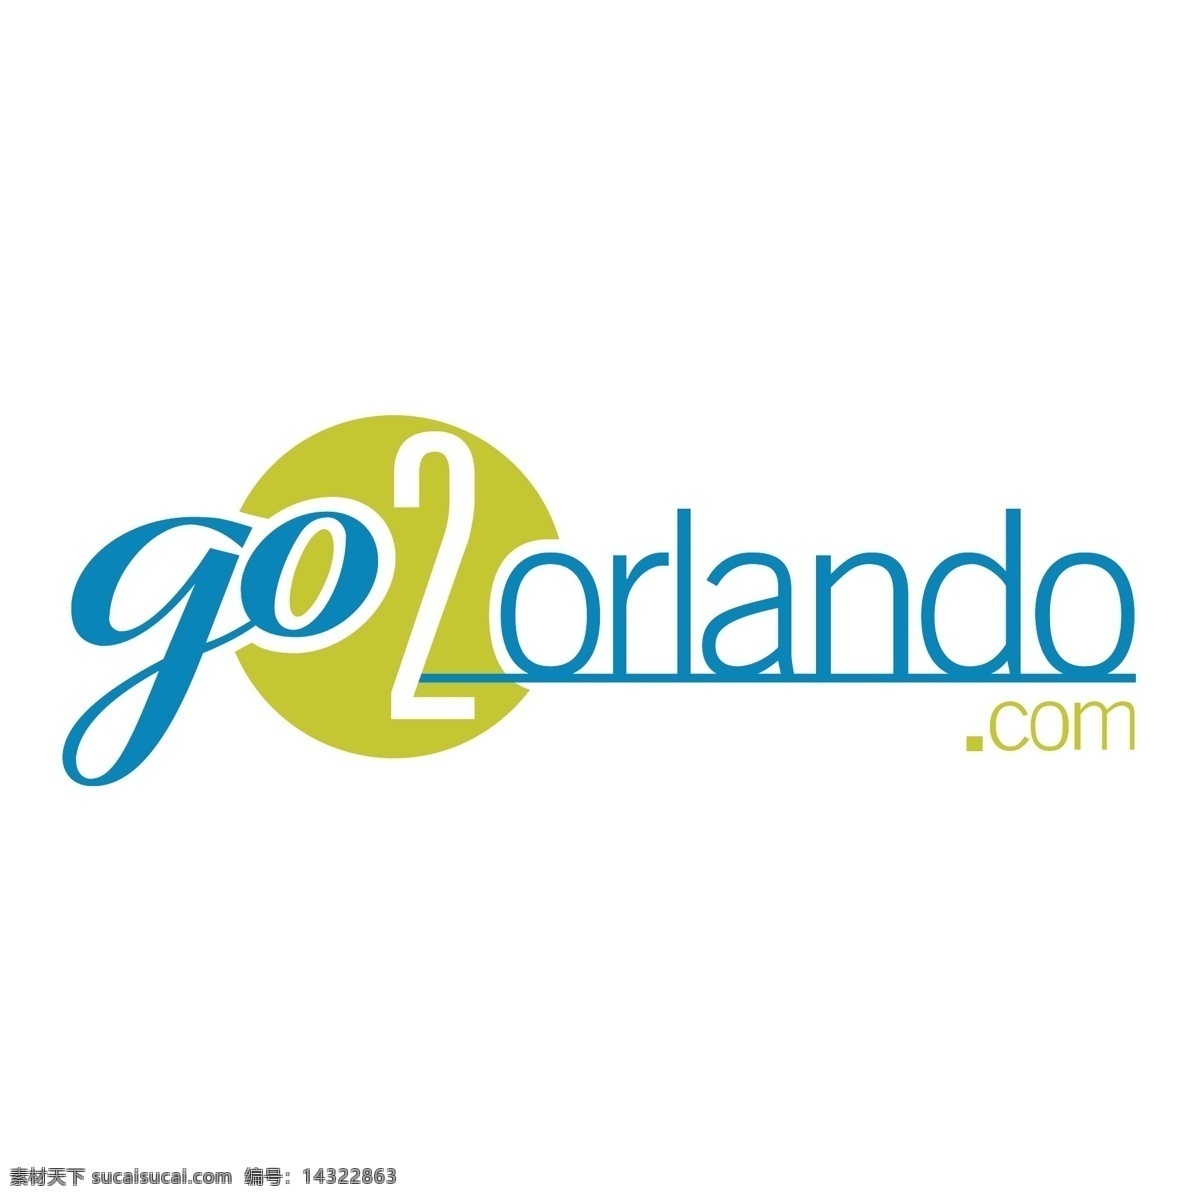 go2orlando com 矢量标志下载 免费矢量标识 商标 品牌标识 标识 矢量 免费 品牌 公司 白色